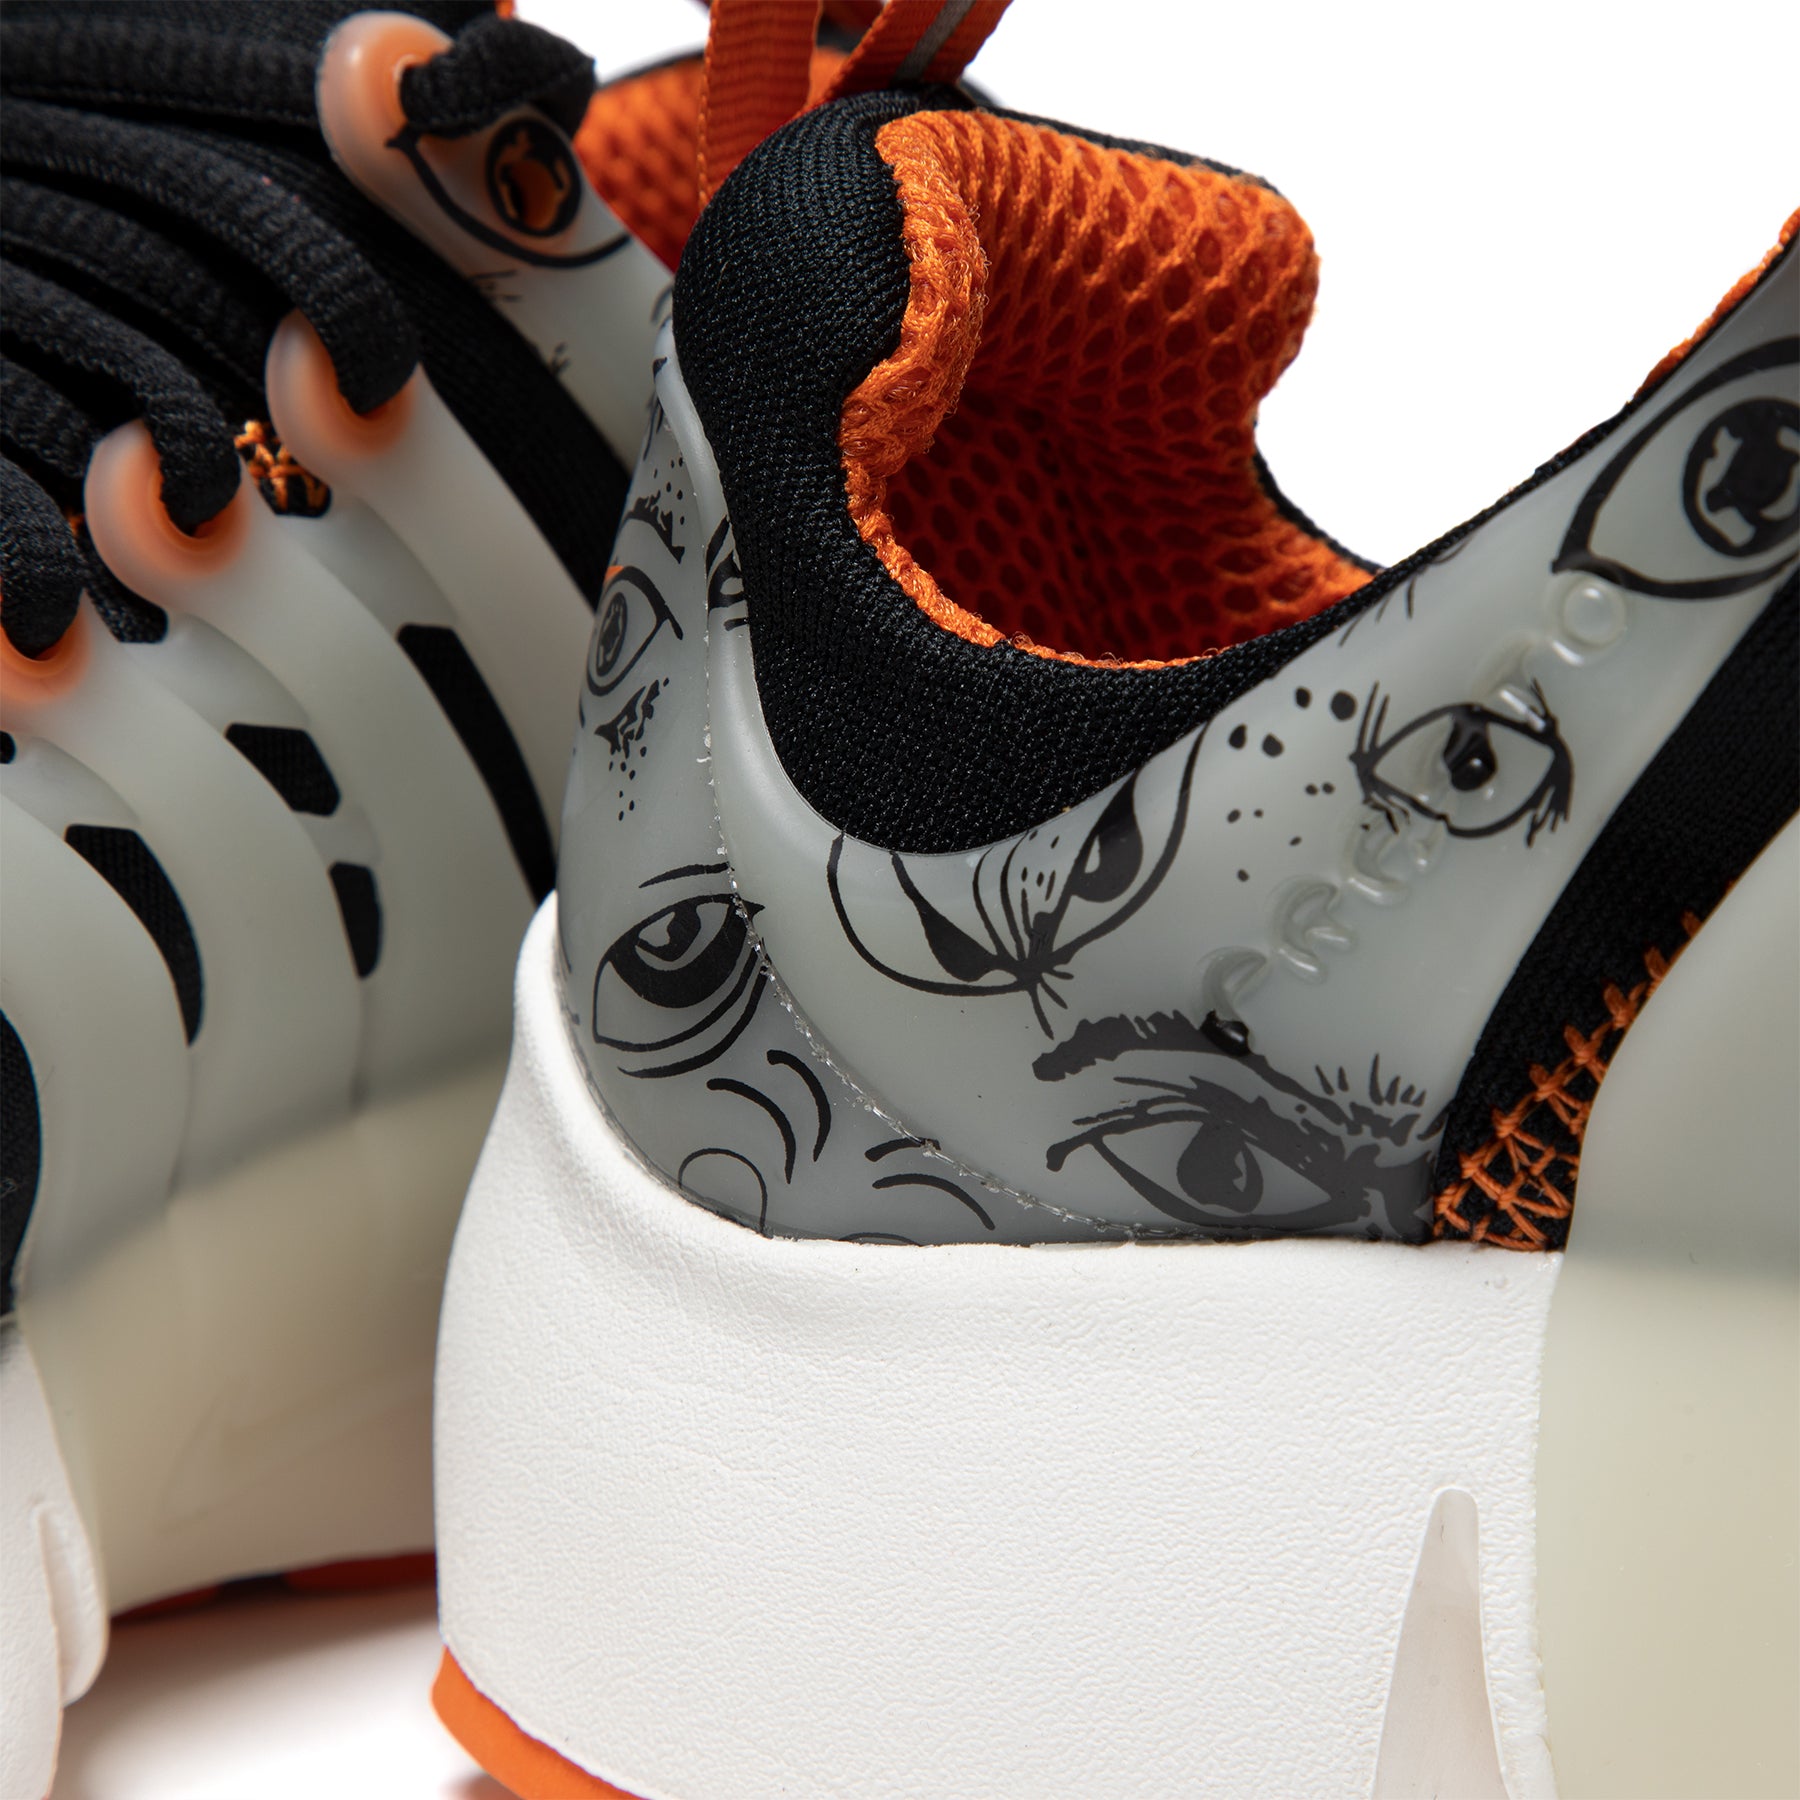 Black & Orange Nike Presto Men Shoes